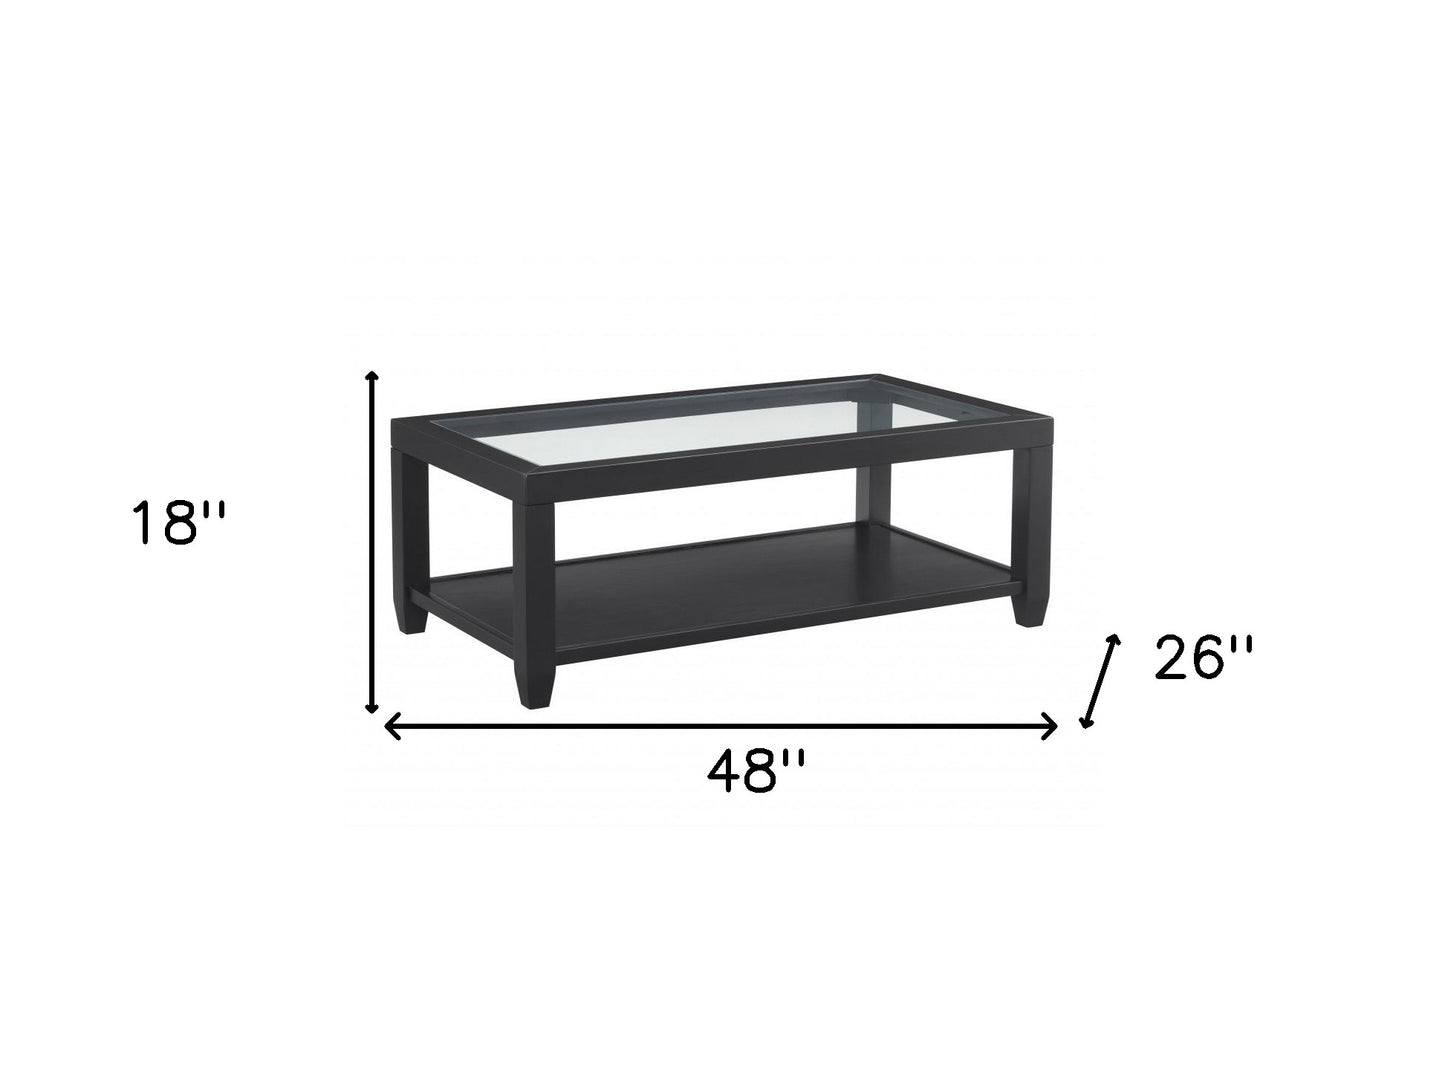 48" Black Glass Rectangular Coffee Table With Shelf